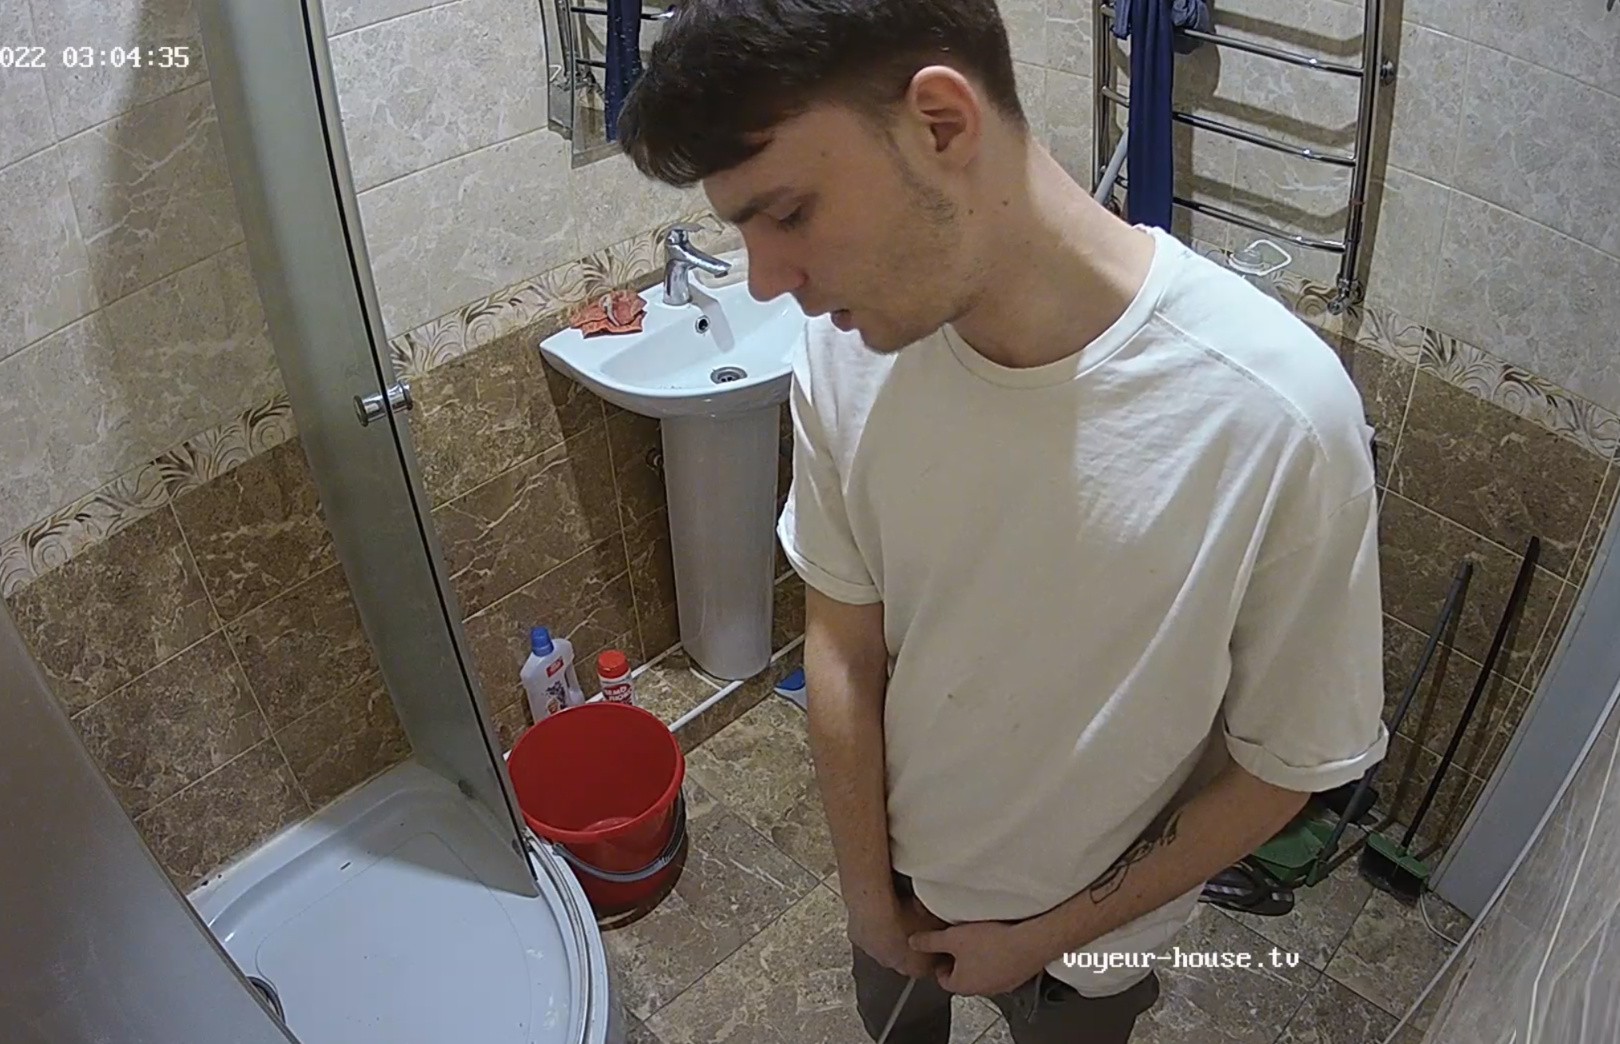 Guest guy peeing 2 Mar 2022